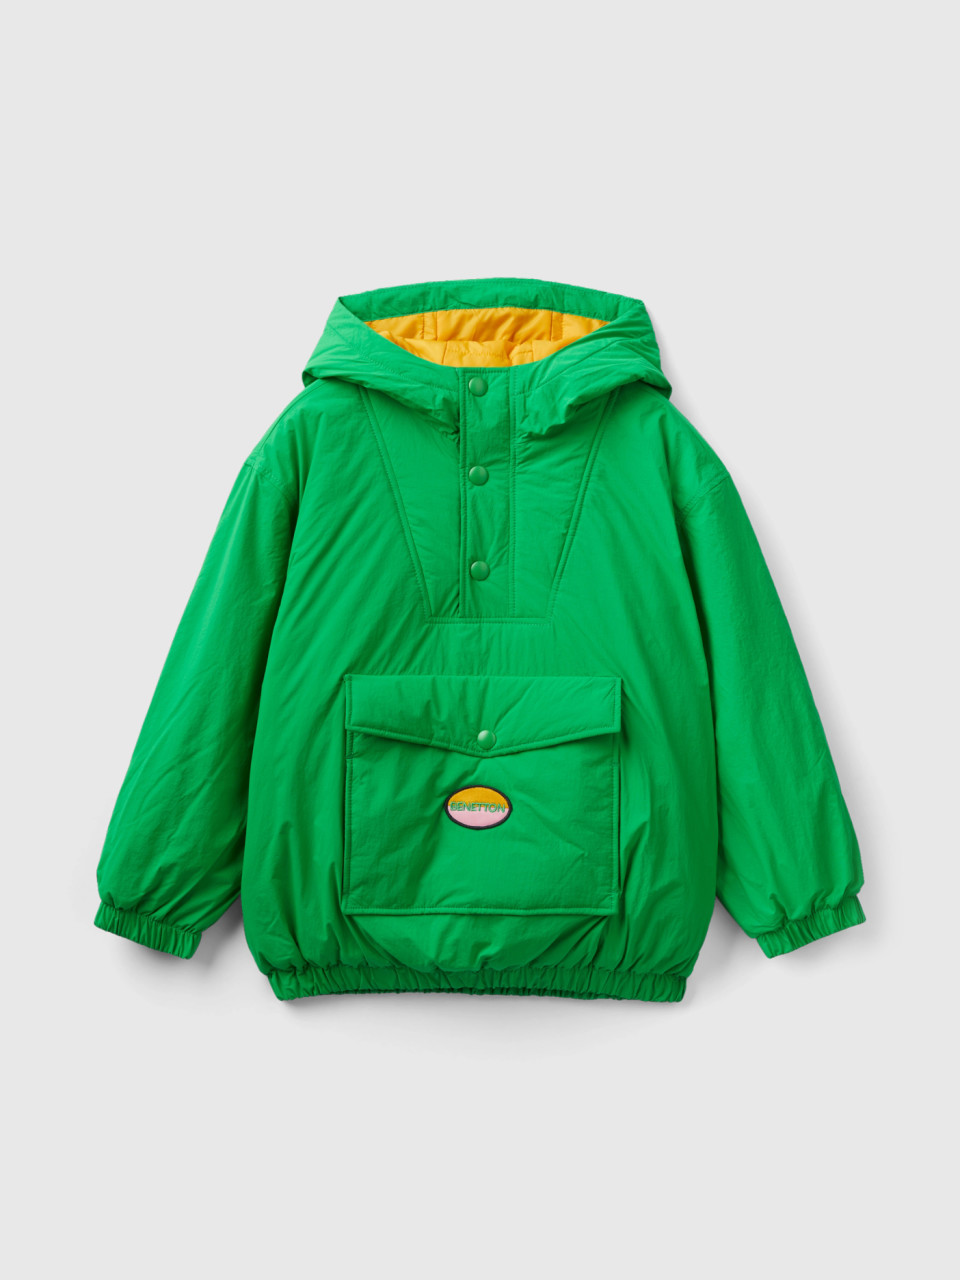 Benetton, Green Jacket With Pocket, Green, Kids